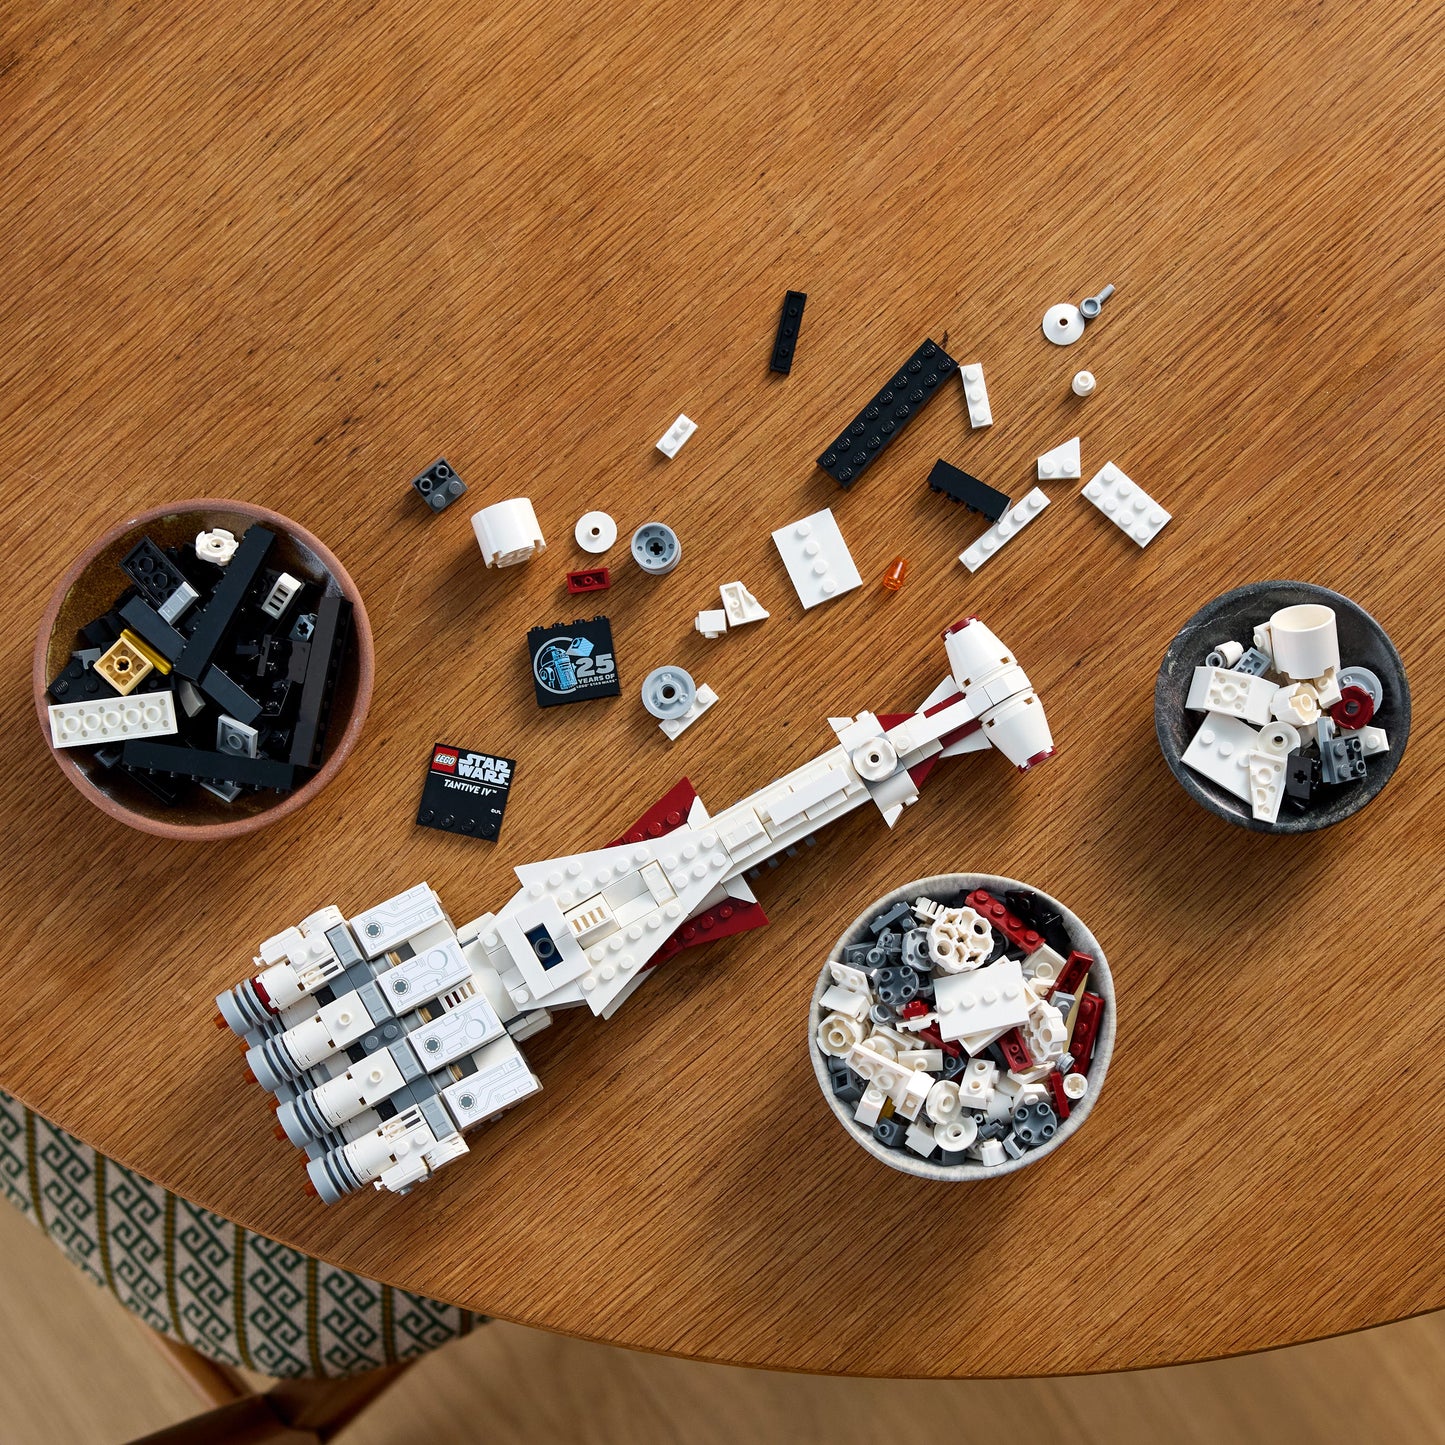 LEGO® Star Wars 75376 Tantive IV™